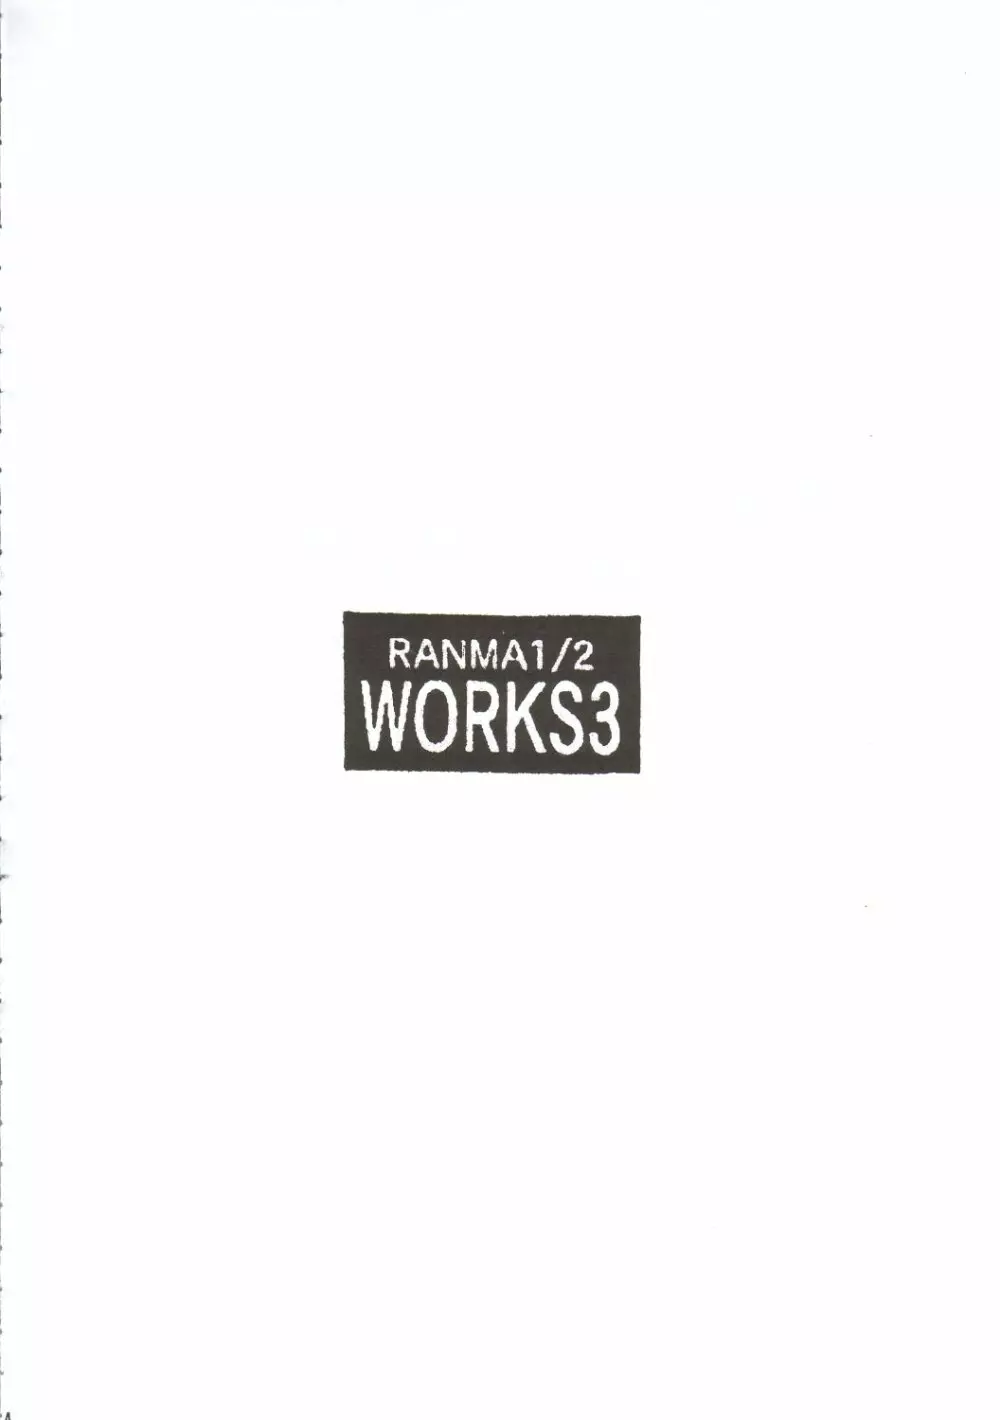 RANMA1/2 WORKS 3 3ページ